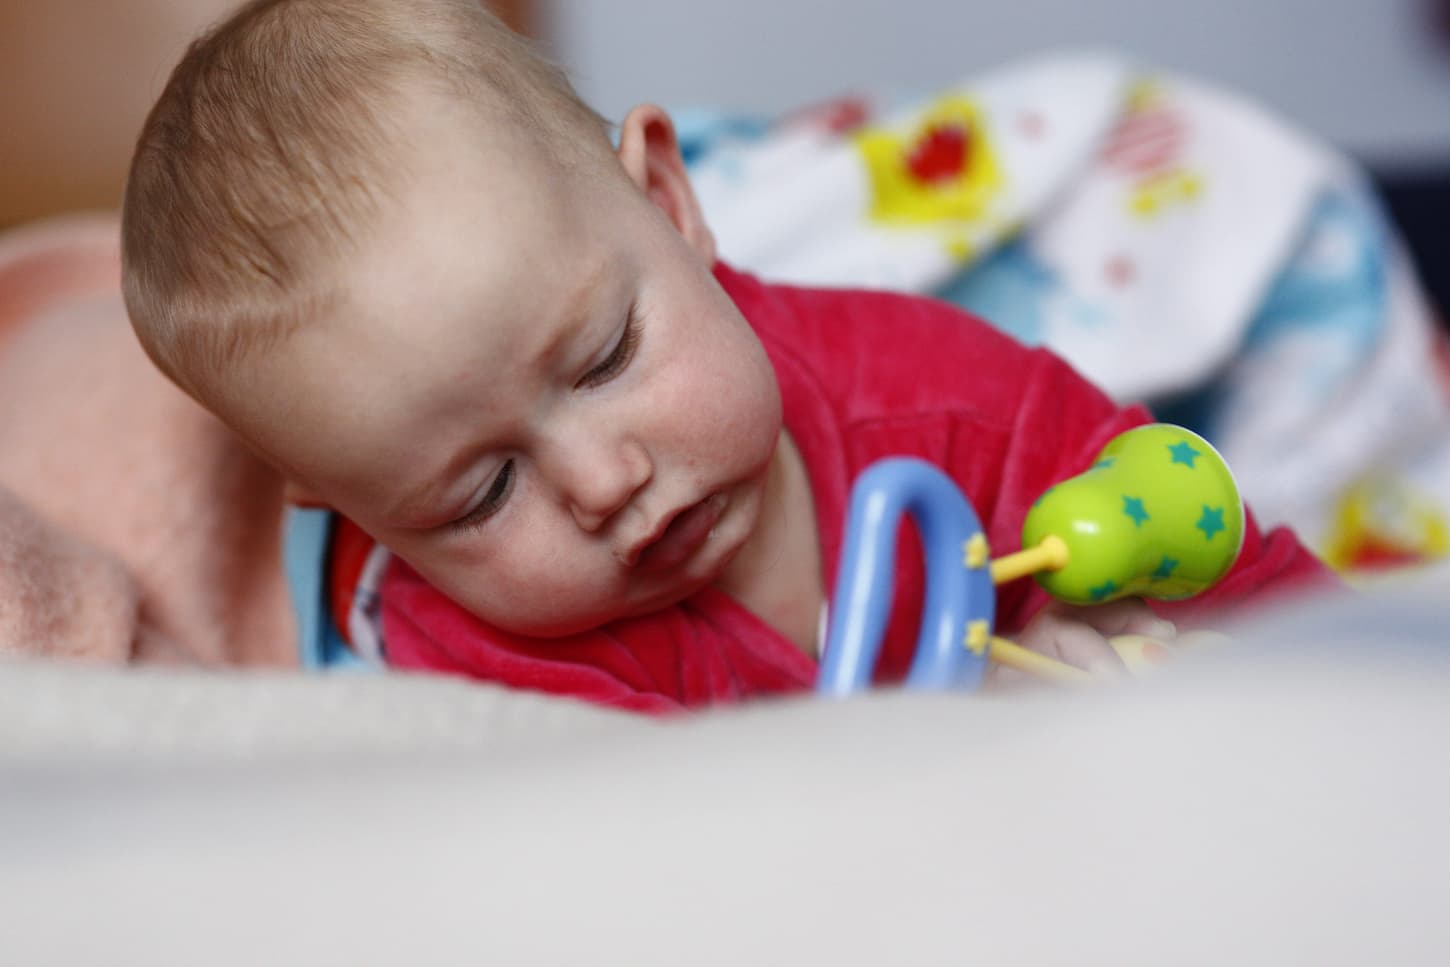 How to Sleep Train When Baby is Teething?